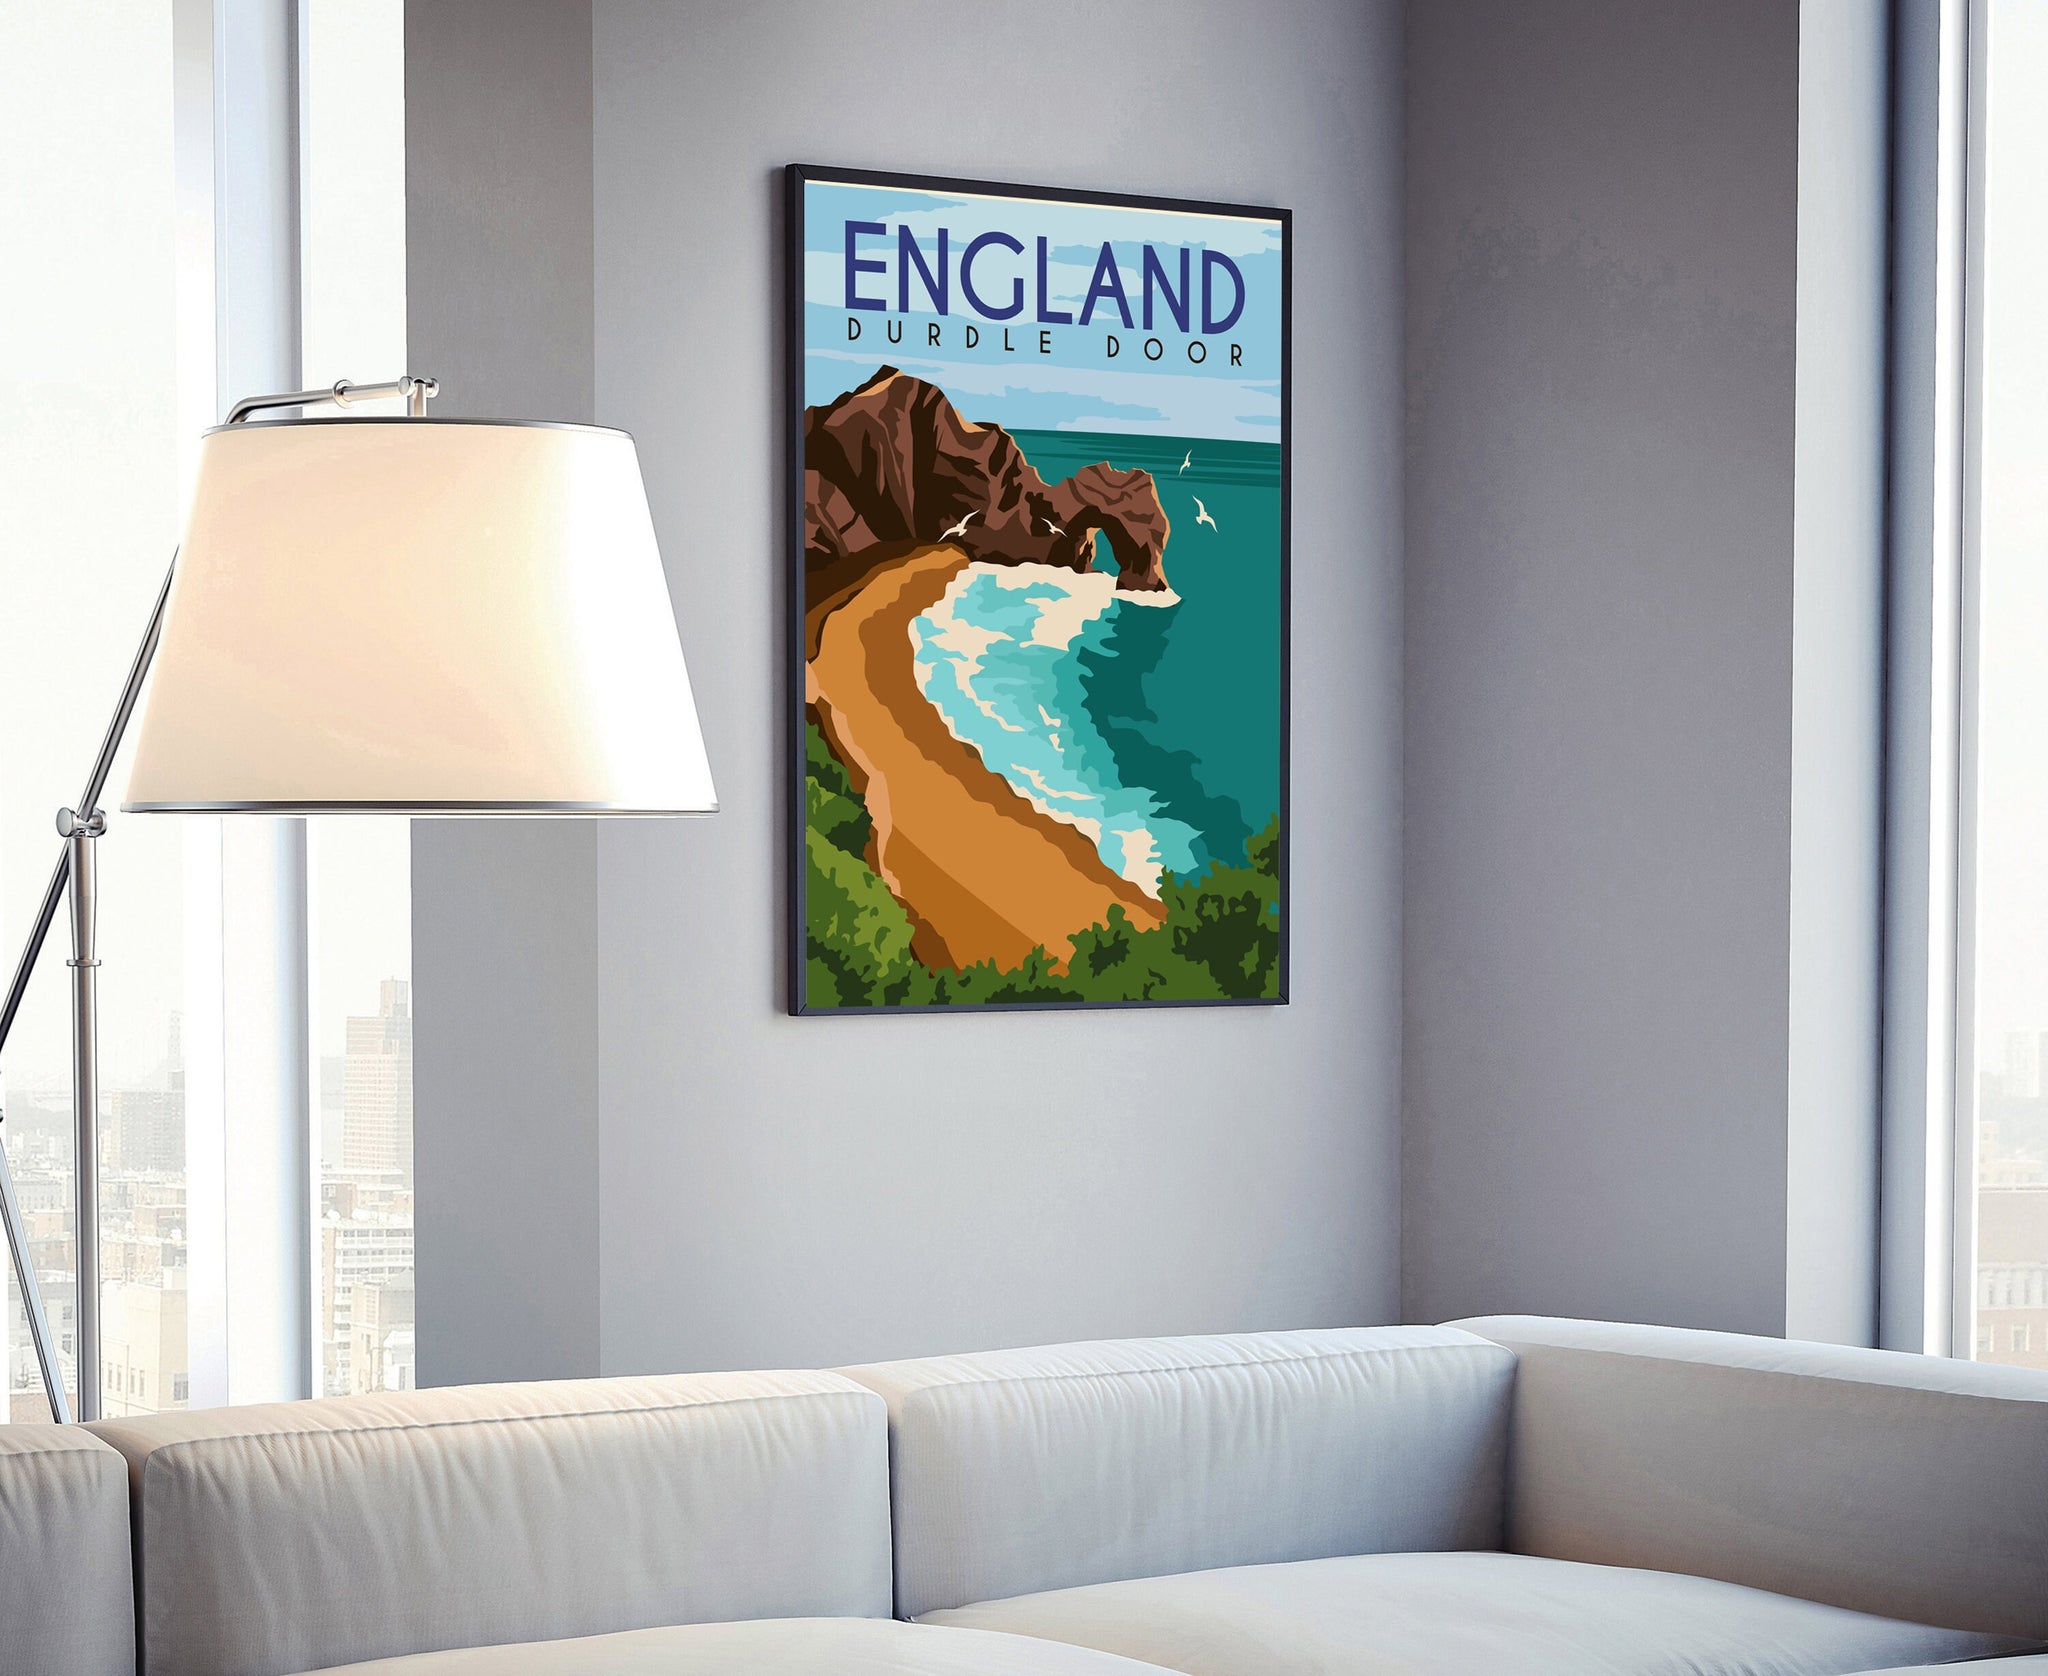 ENGLAND DURDLE DOOR retro travel poster, Durdle Door cityscape poster, England landmark poster wall art, Home wall art, Office wall decor